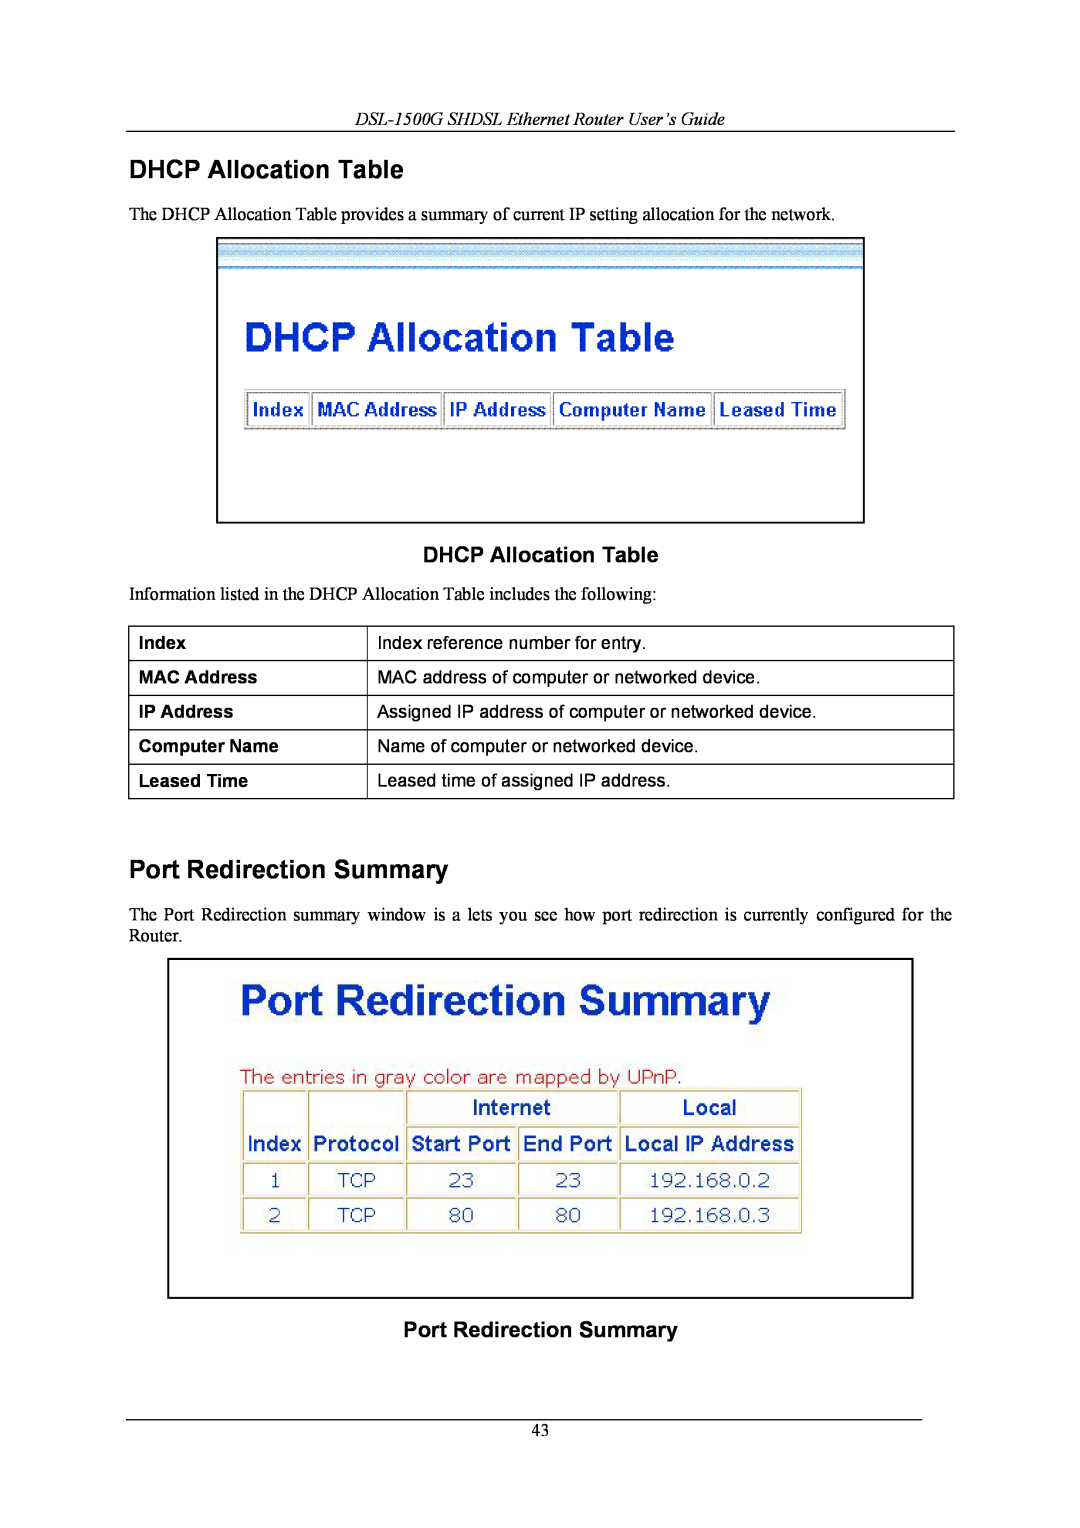 D-Link manual DHCP Allocation Table, Port Redirection Summary, DSL-1500G SHDSL Ethernet Router User’s Guide 